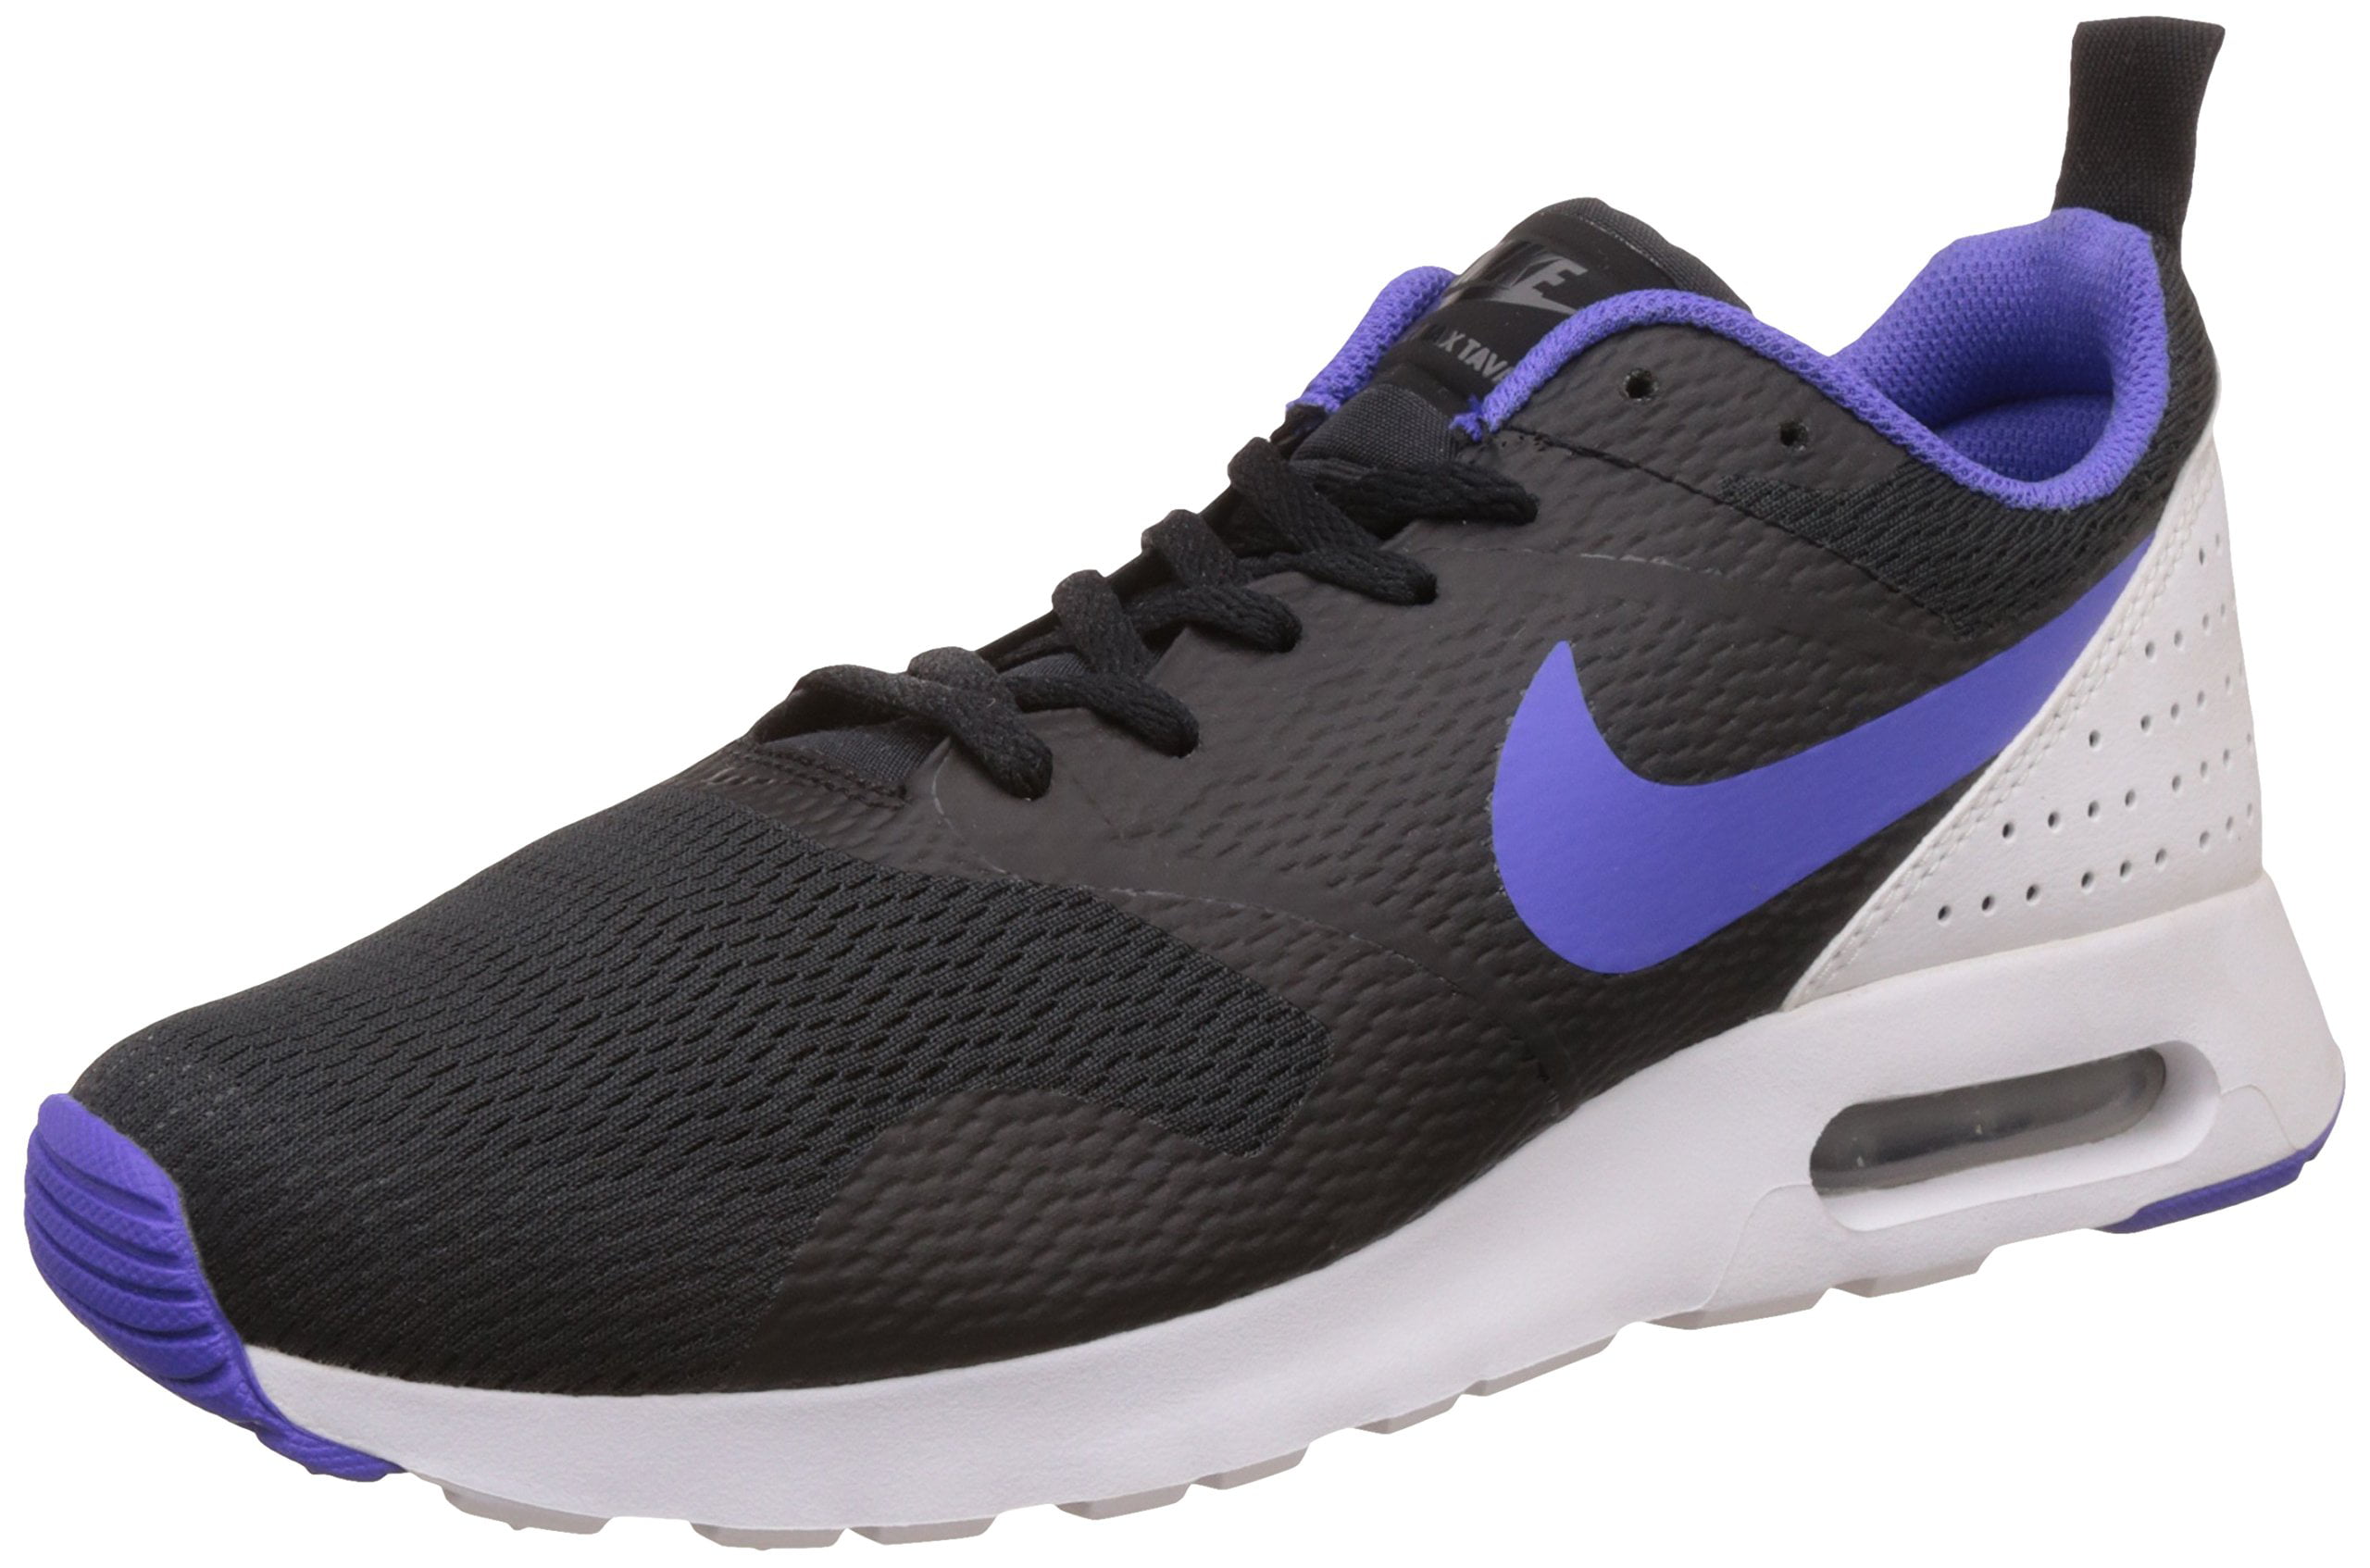 Nike Mens Air Max Tavas Running Shoes Black/White/Persian Violet 705149-025 Size 8 -